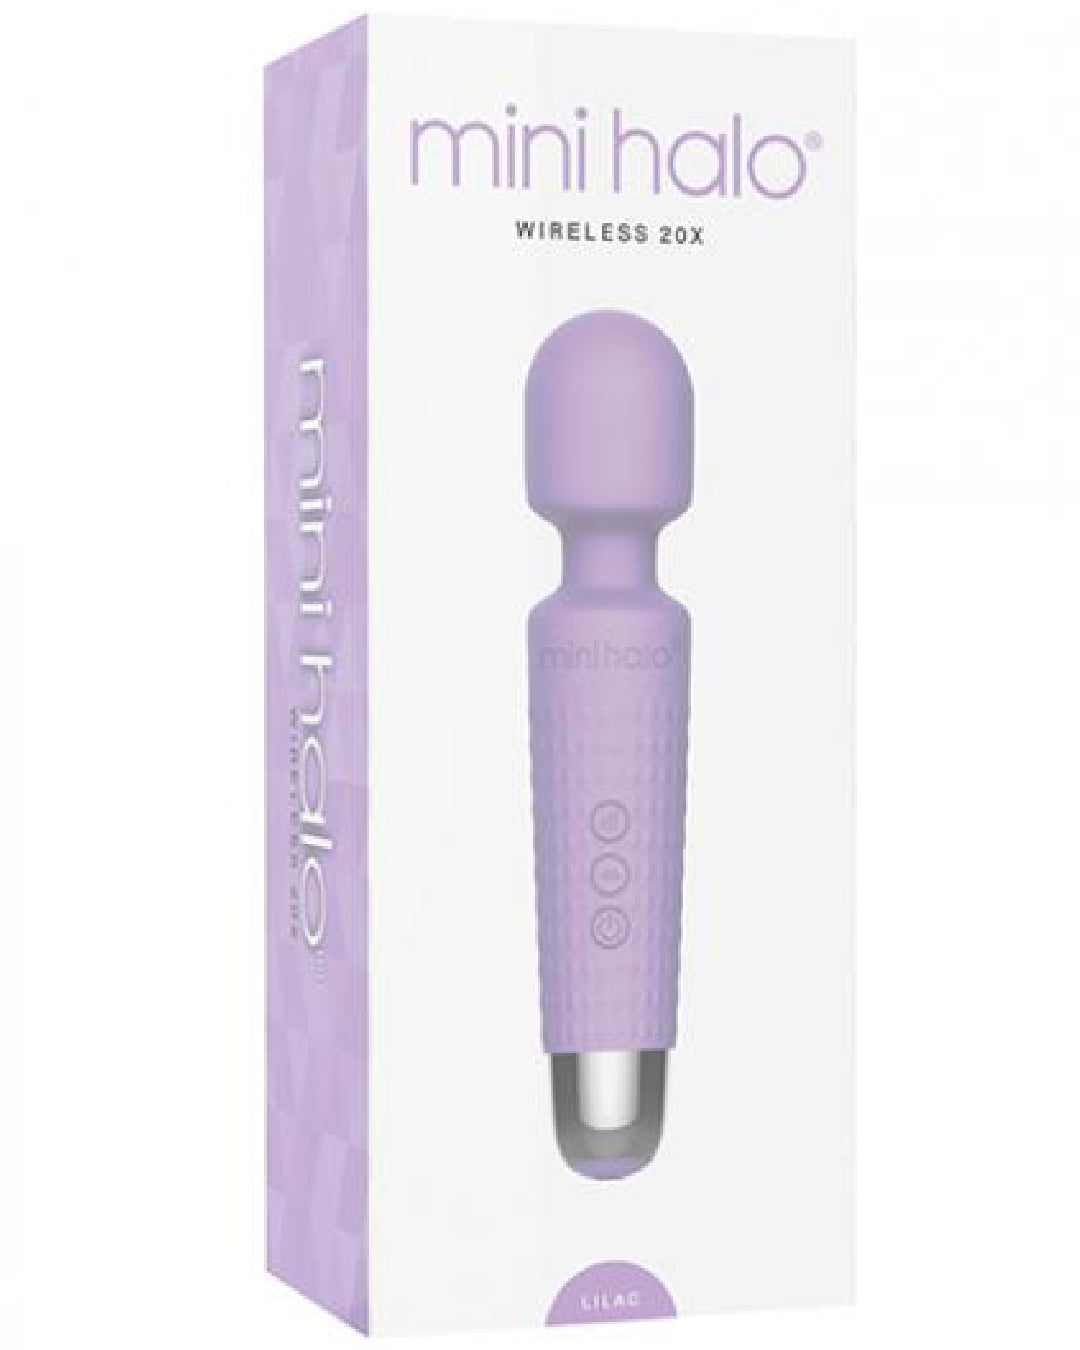 Mini Halo Extra Powerful Wand Vibrator - Lilac product box 